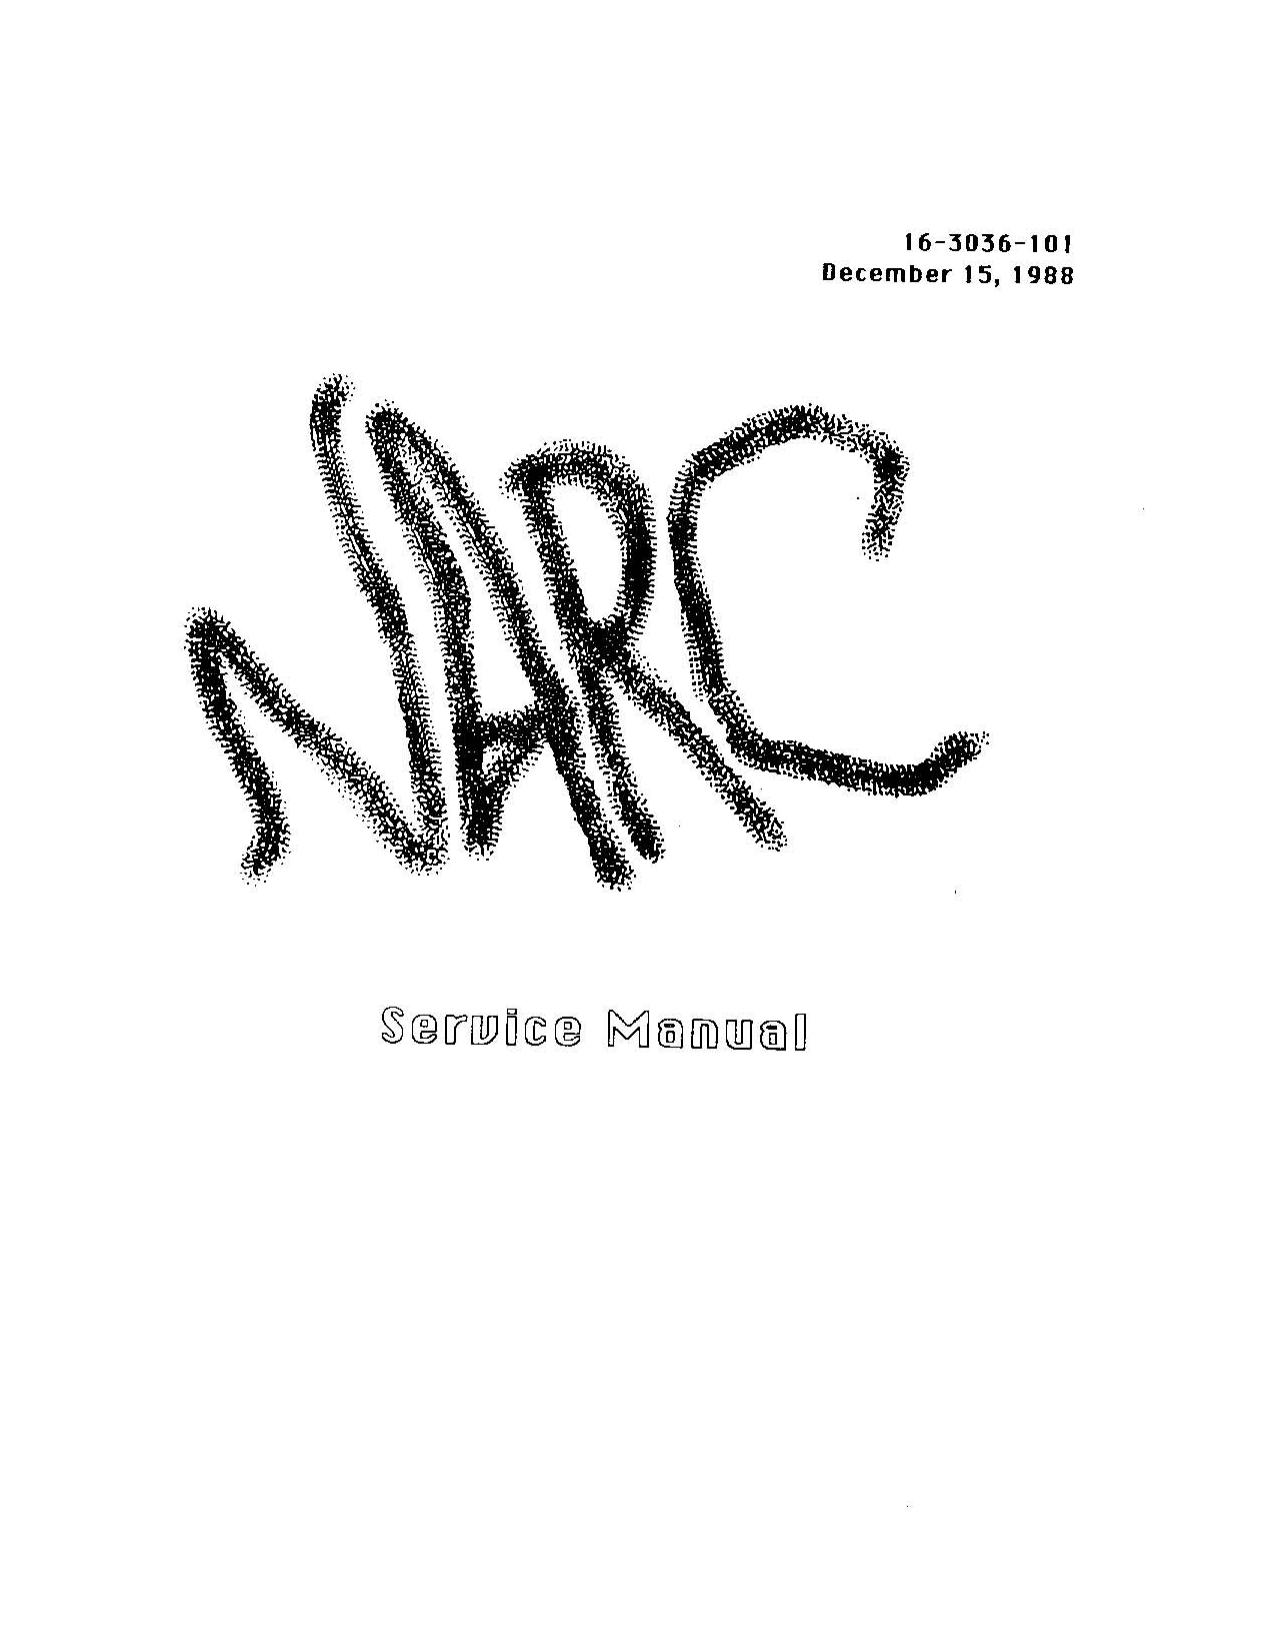 NARC (Service) (U)